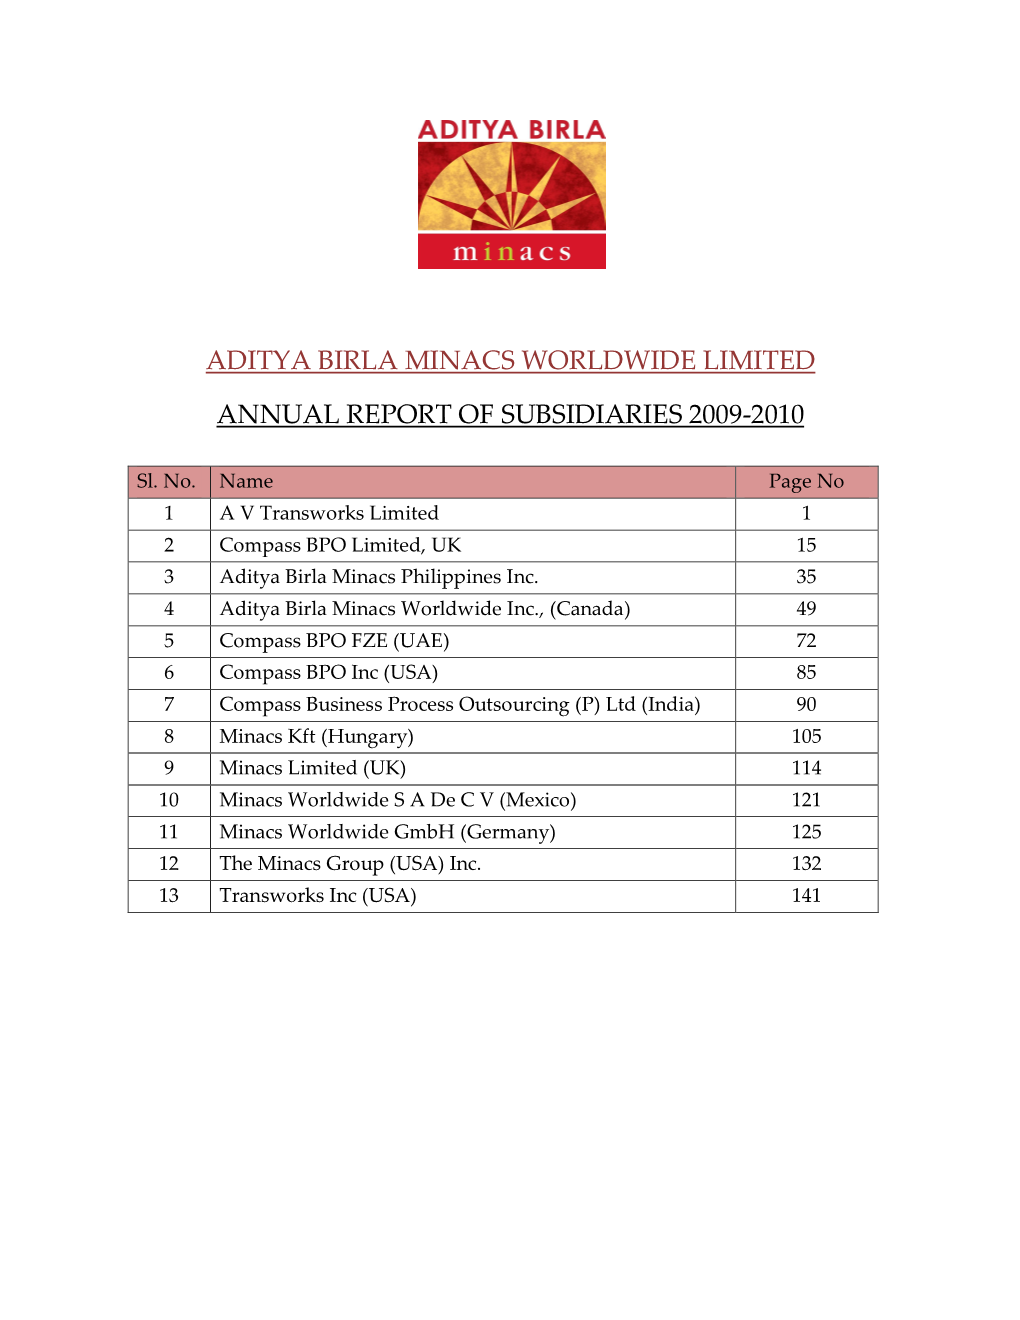 Aditya Birla Minacs Worldwide Limited Annual